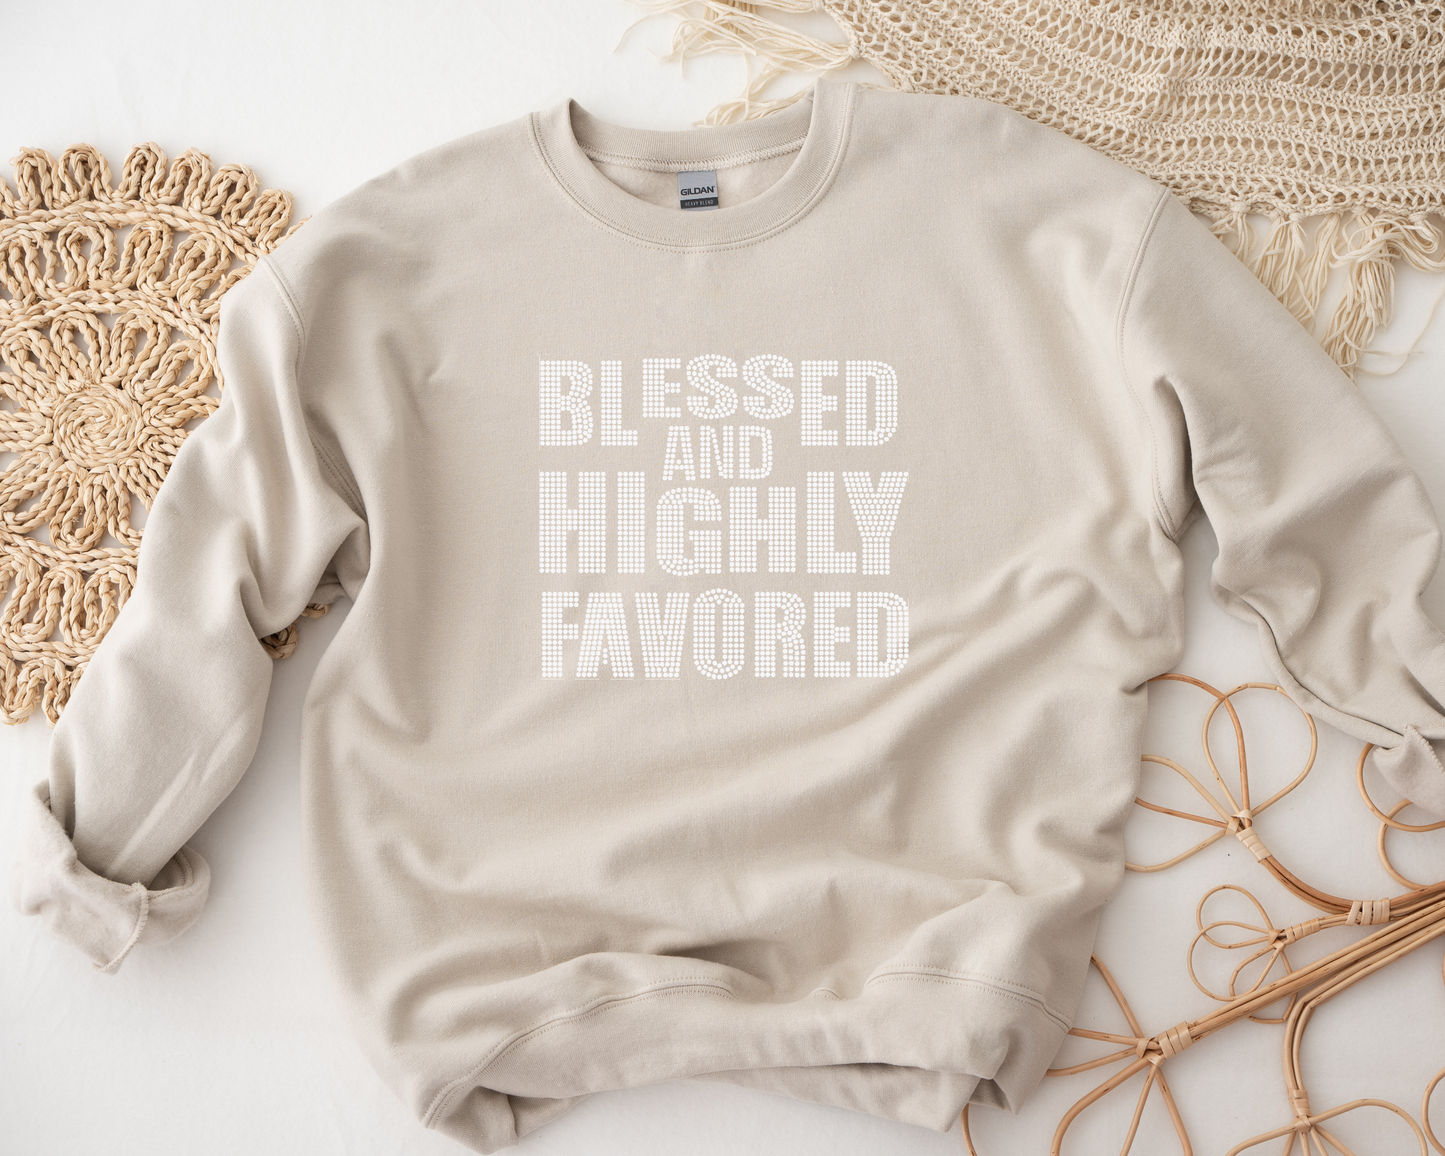 Blessed and Highly Favored Rhinestone hoodies/sweatshirts